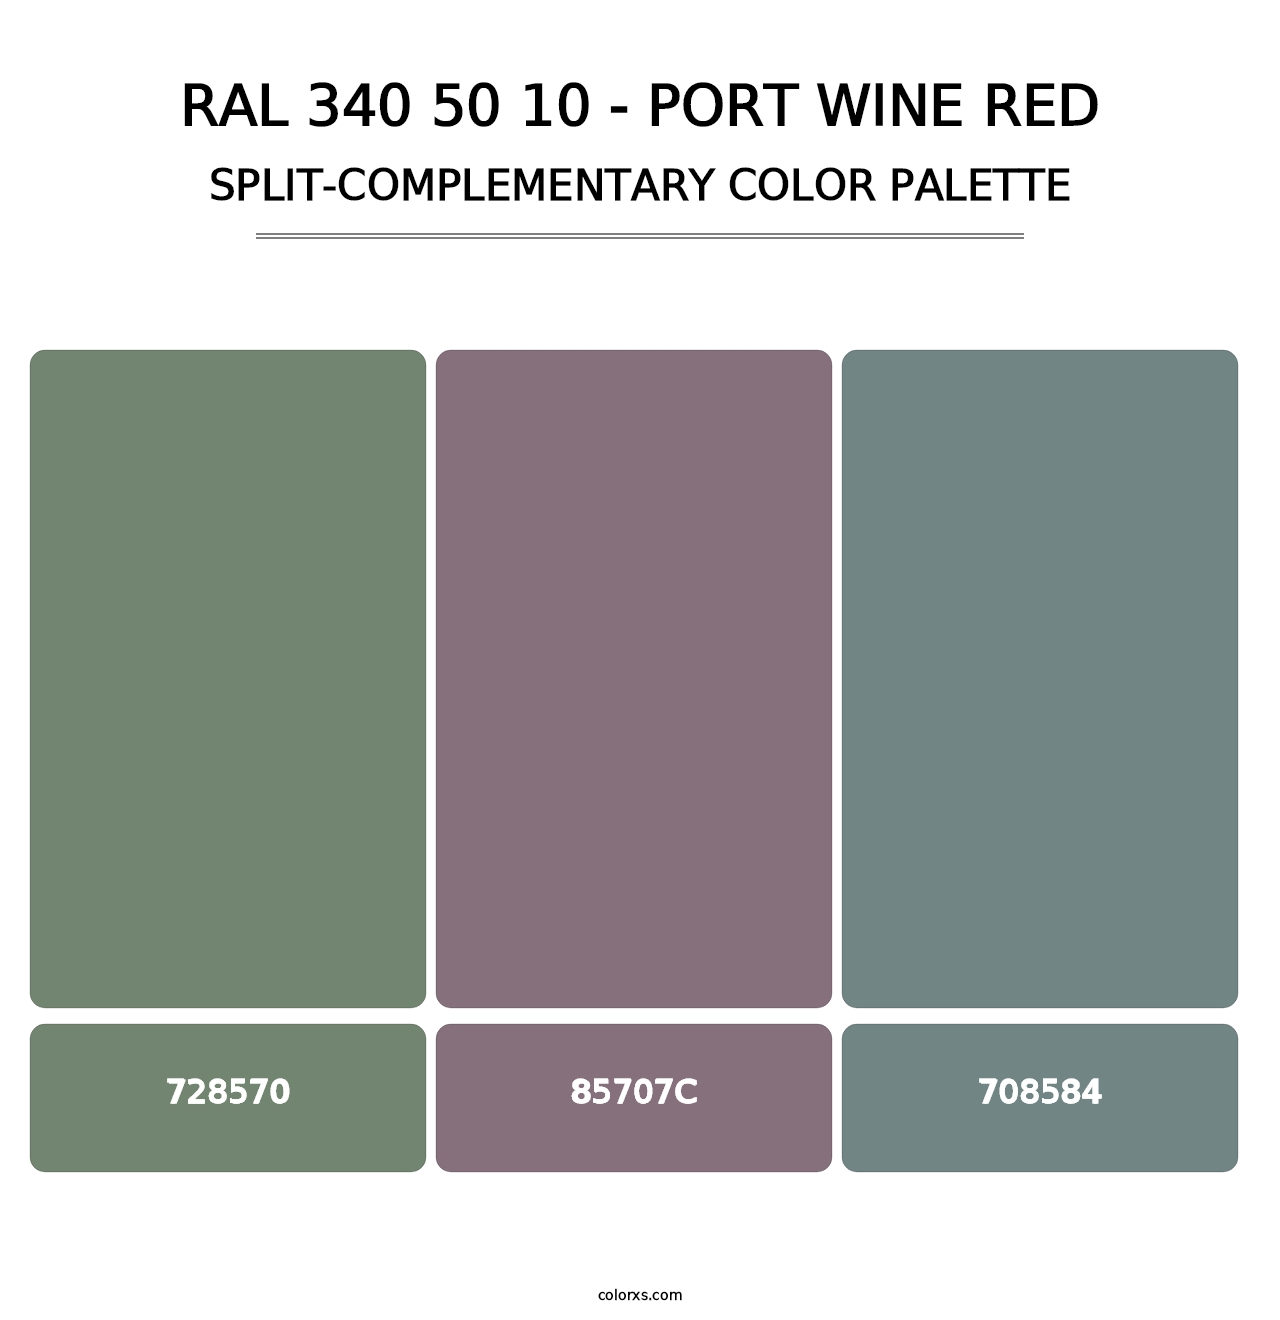 RAL 340 50 10 - Port Wine Red - Split-Complementary Color Palette